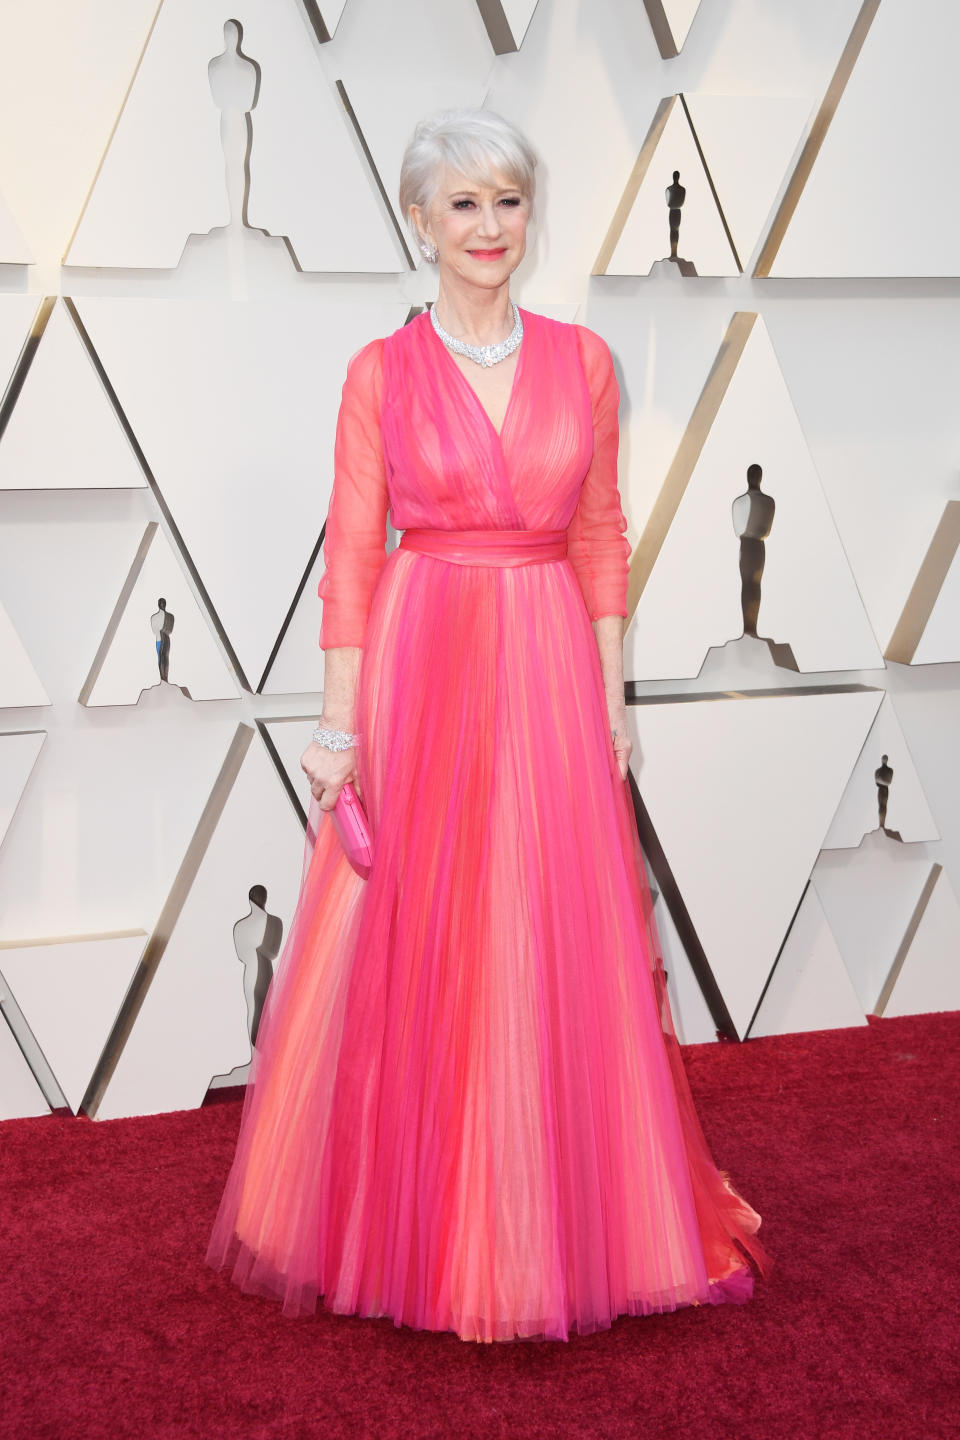 Dame Helen Mirren at the Oscars 2019